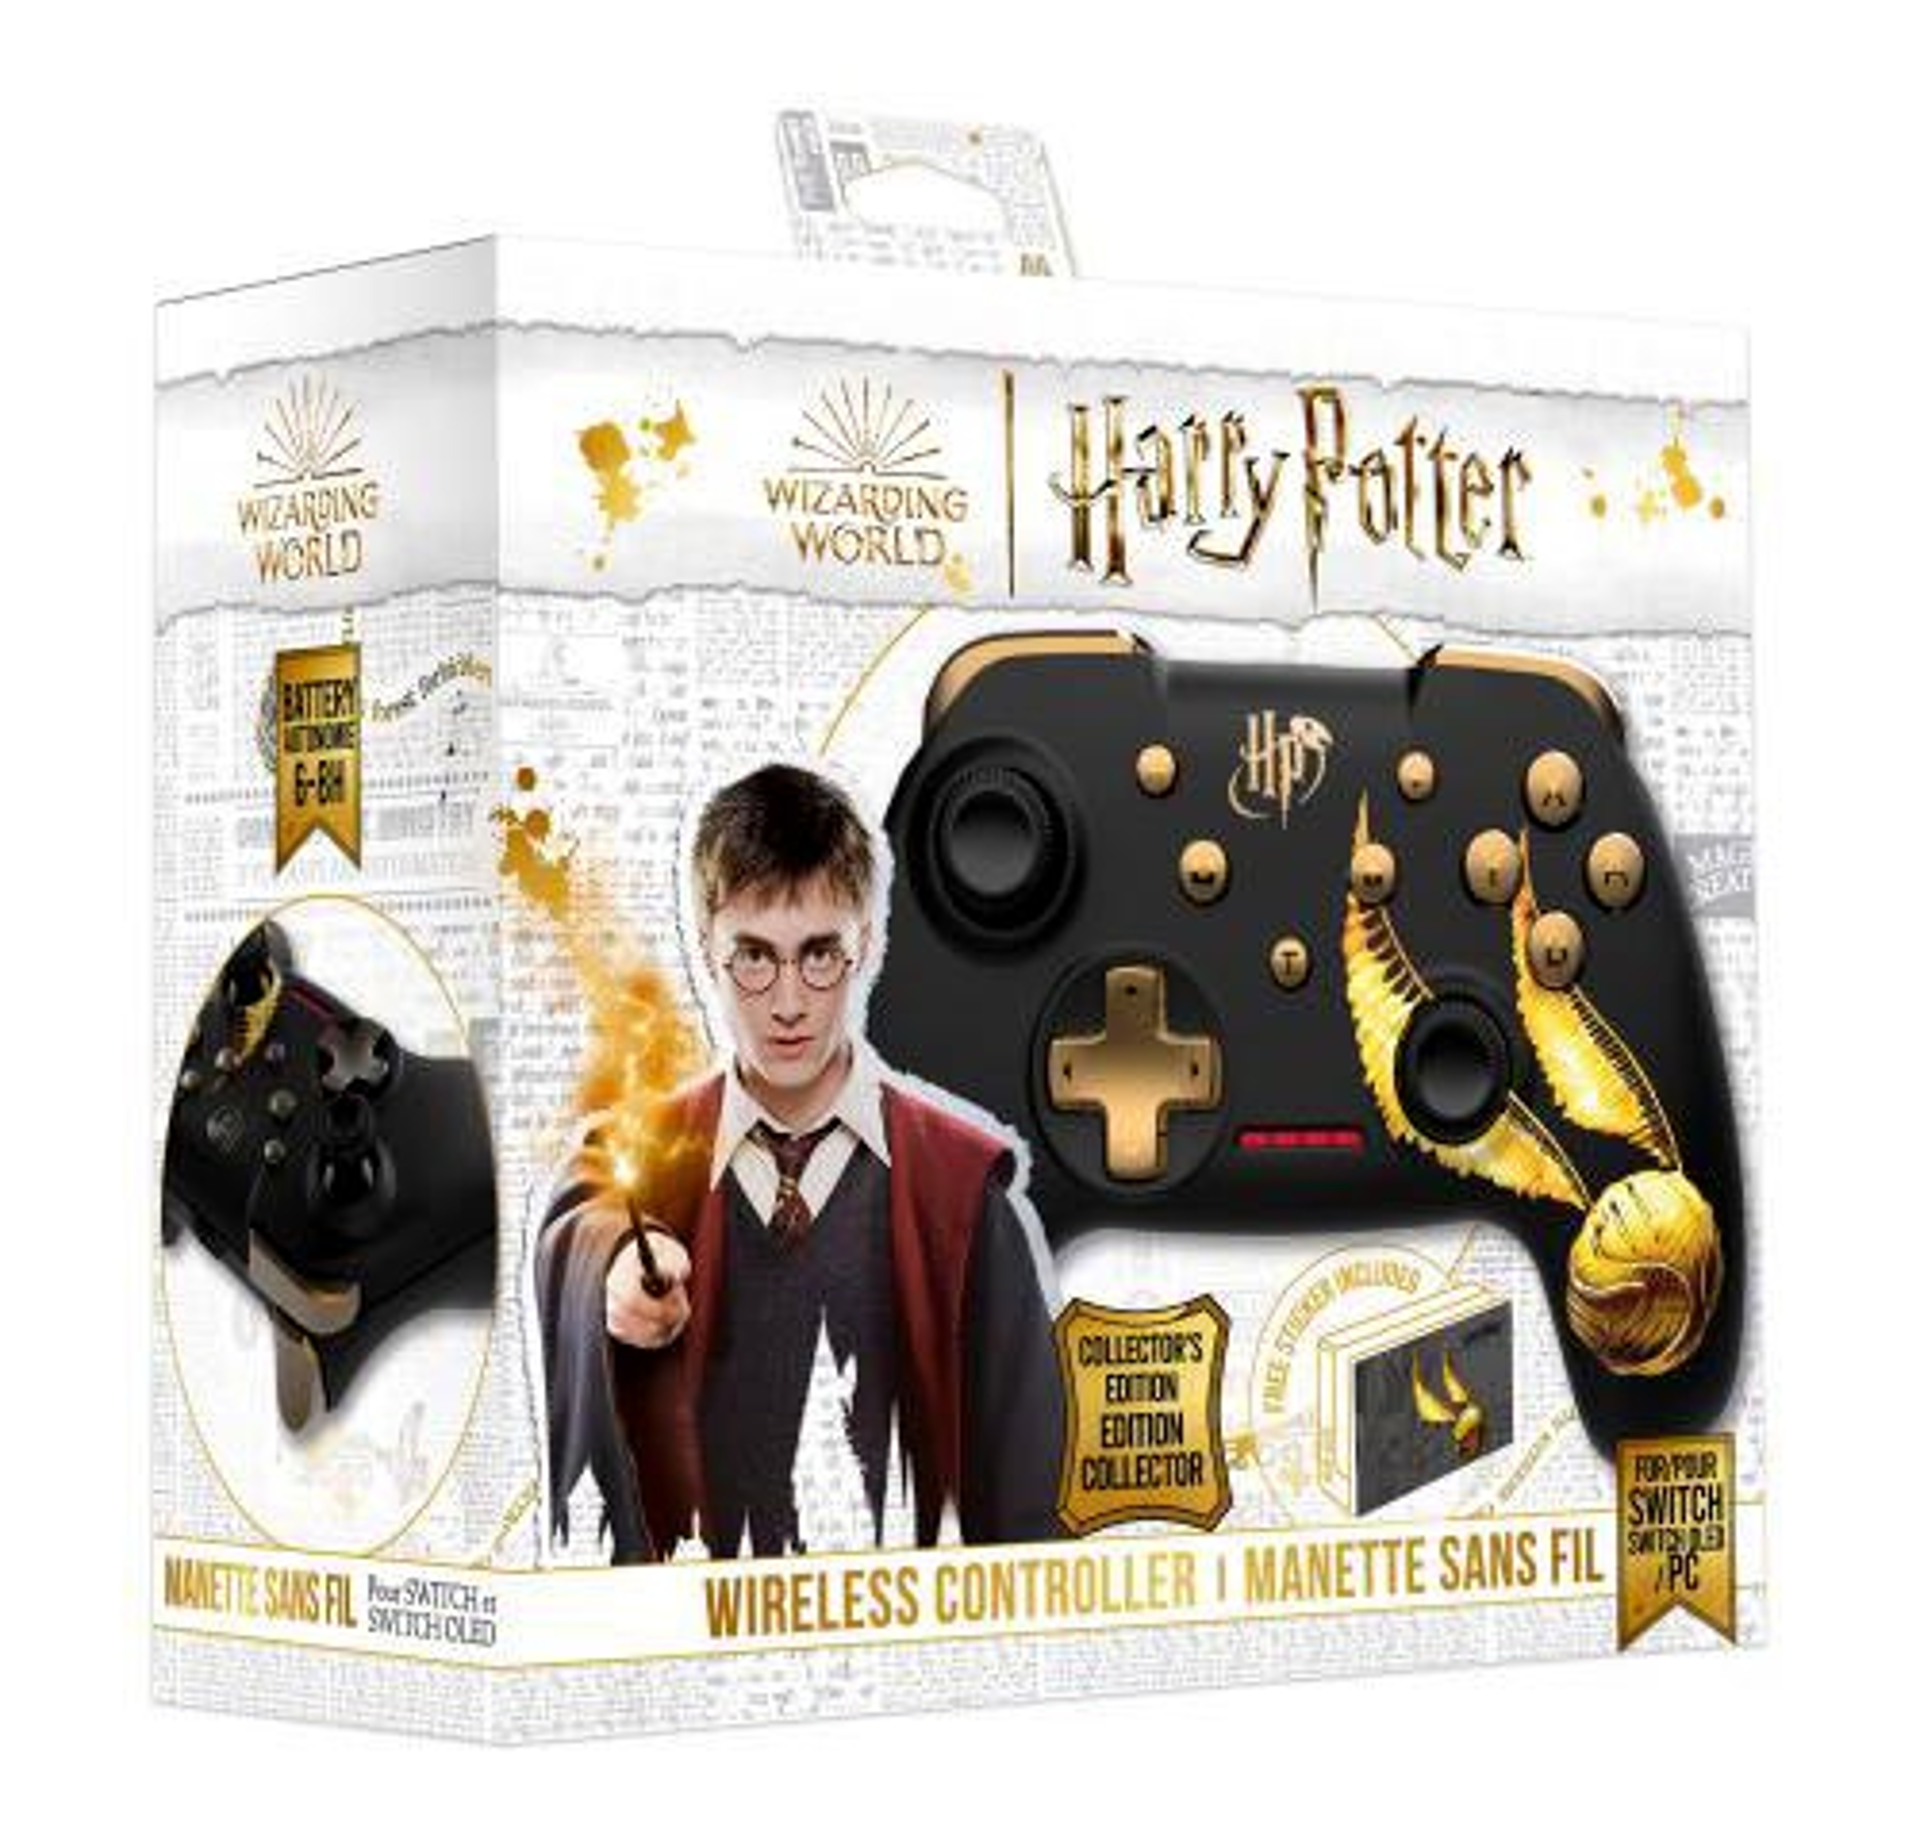 Coffret jeu switch + dvd Harry potter - Nintendo